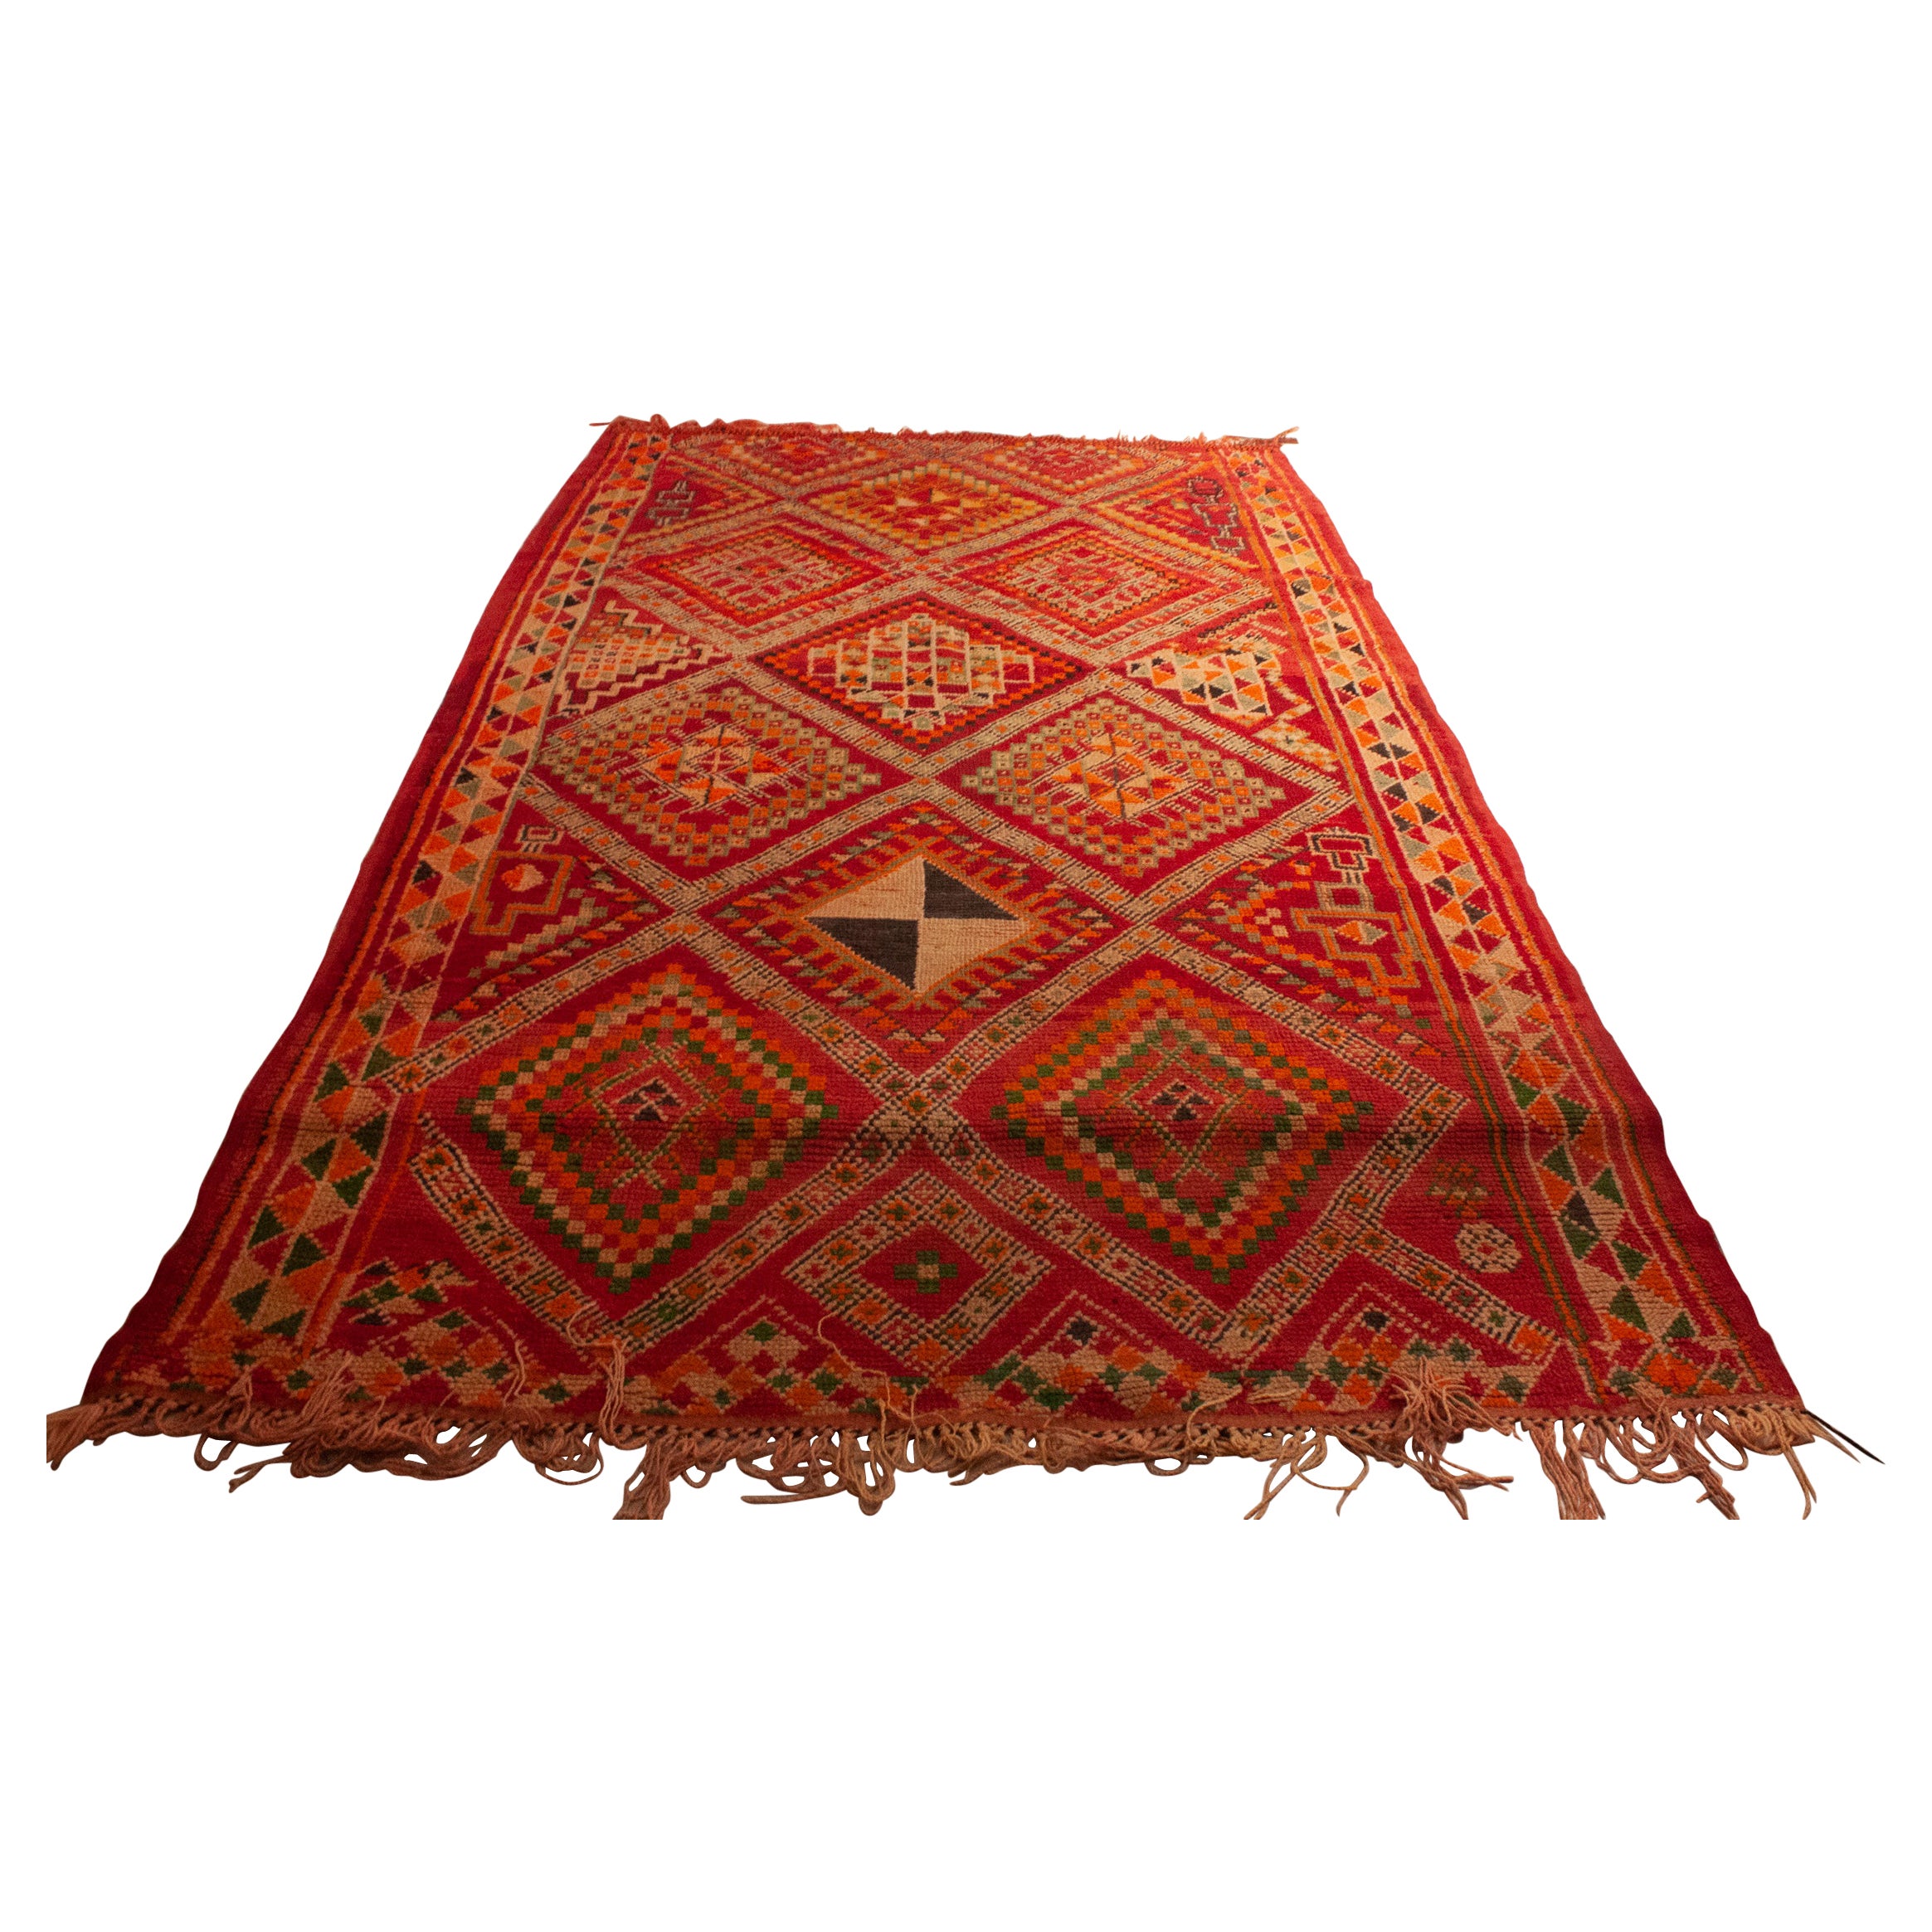 Vintage Colorful Moroccan Carpet